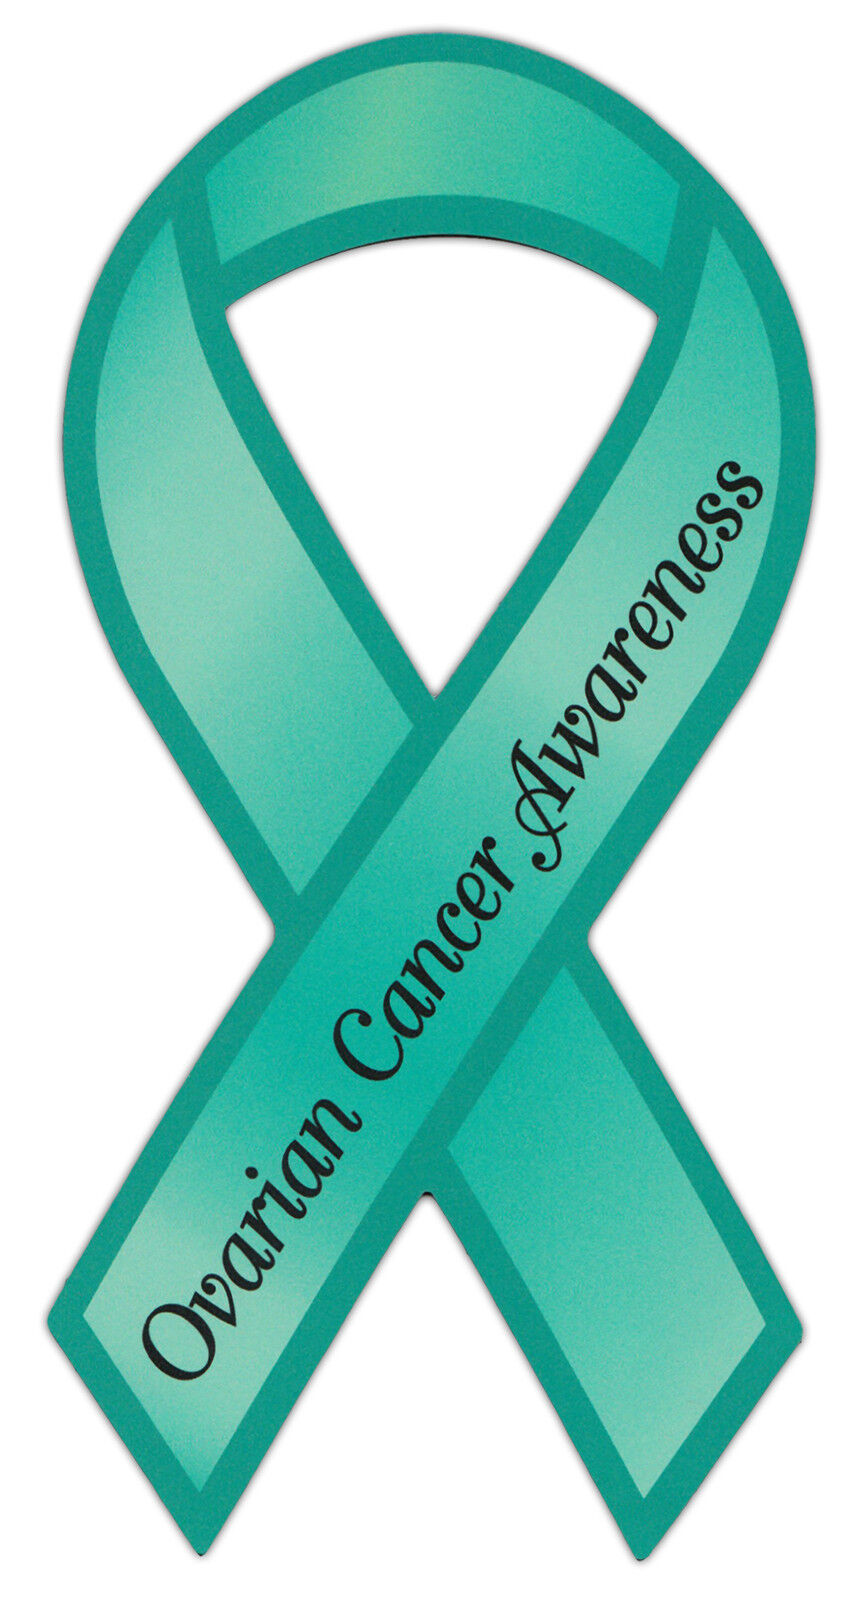 Ribbon Awareness Support Magnet - Ovarian Cancer - Cars, Trucks, Refrigerator